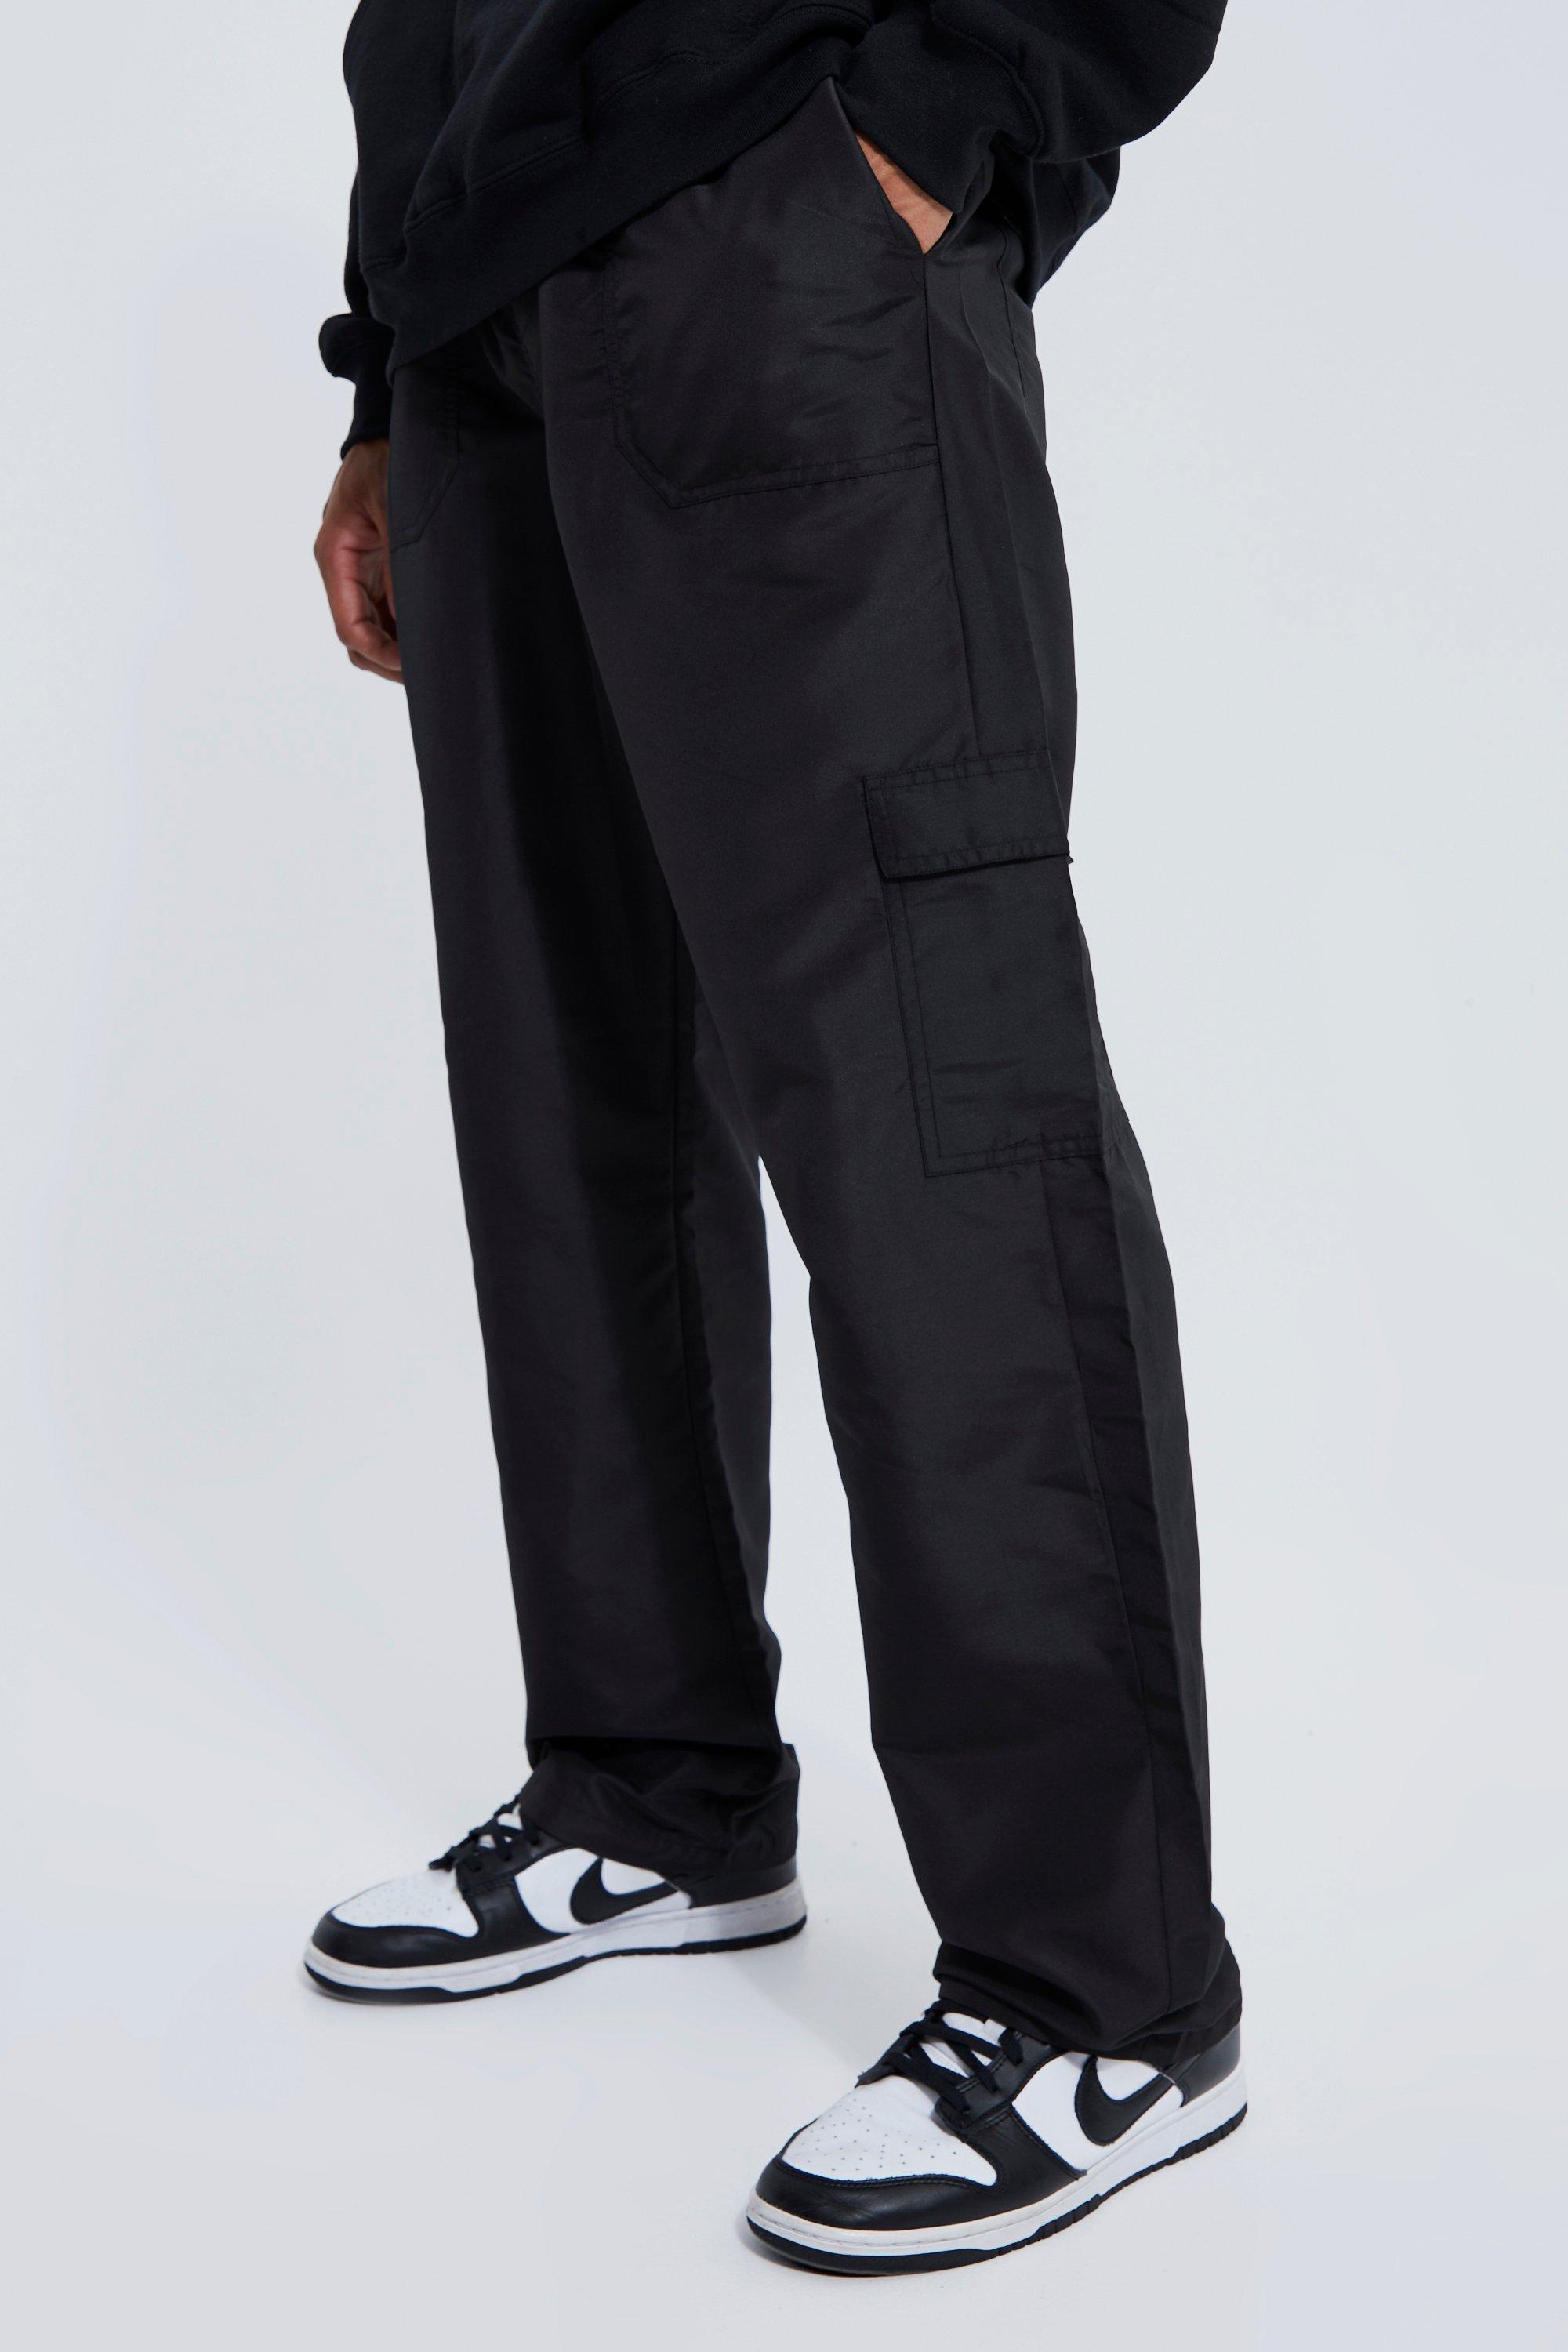 pantalon cargo chino ample homme - noir - s, noir